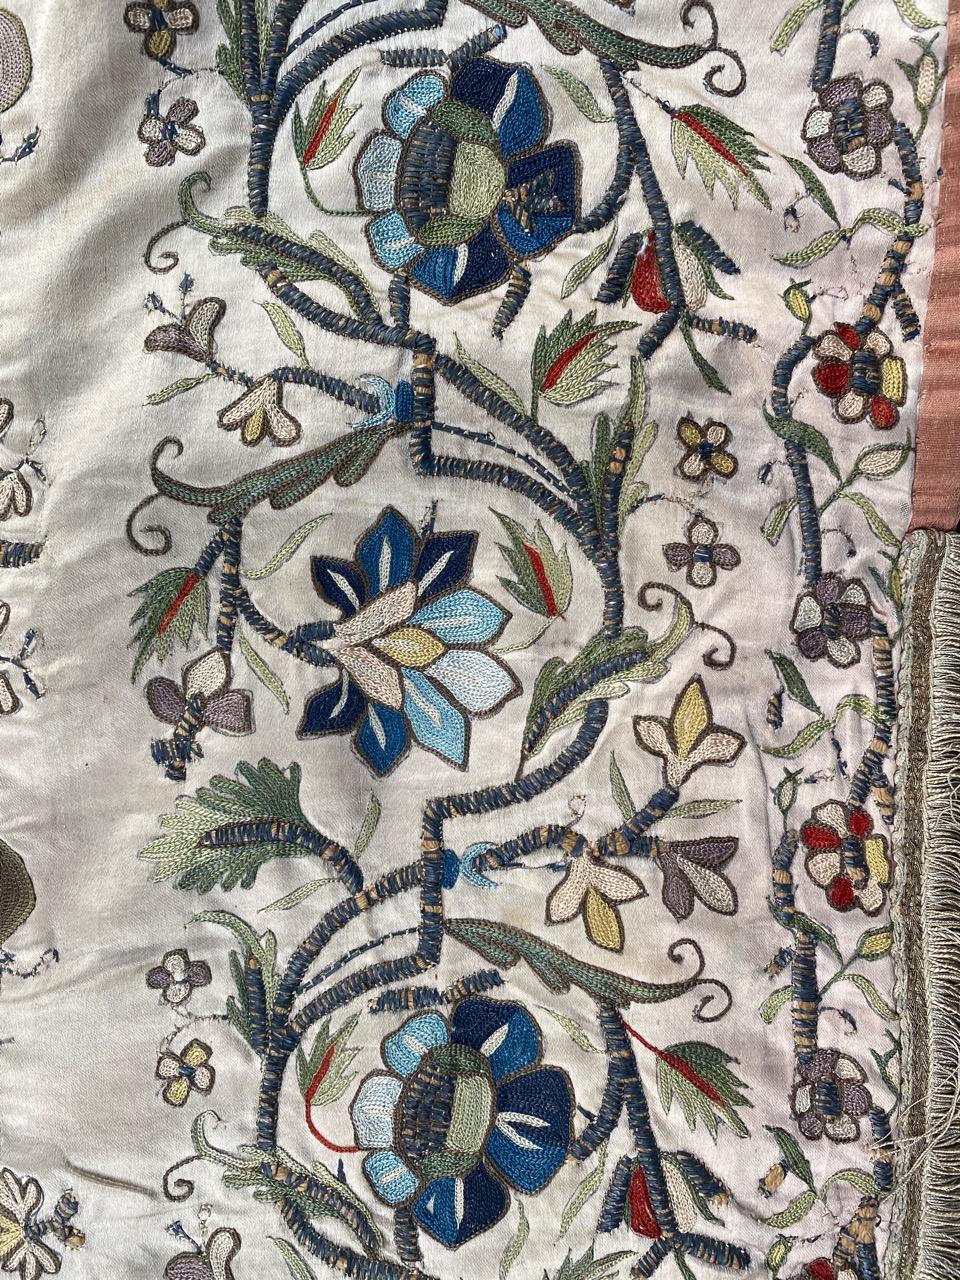 Wonderful Antique Turkish Ottoman Embroidery 9